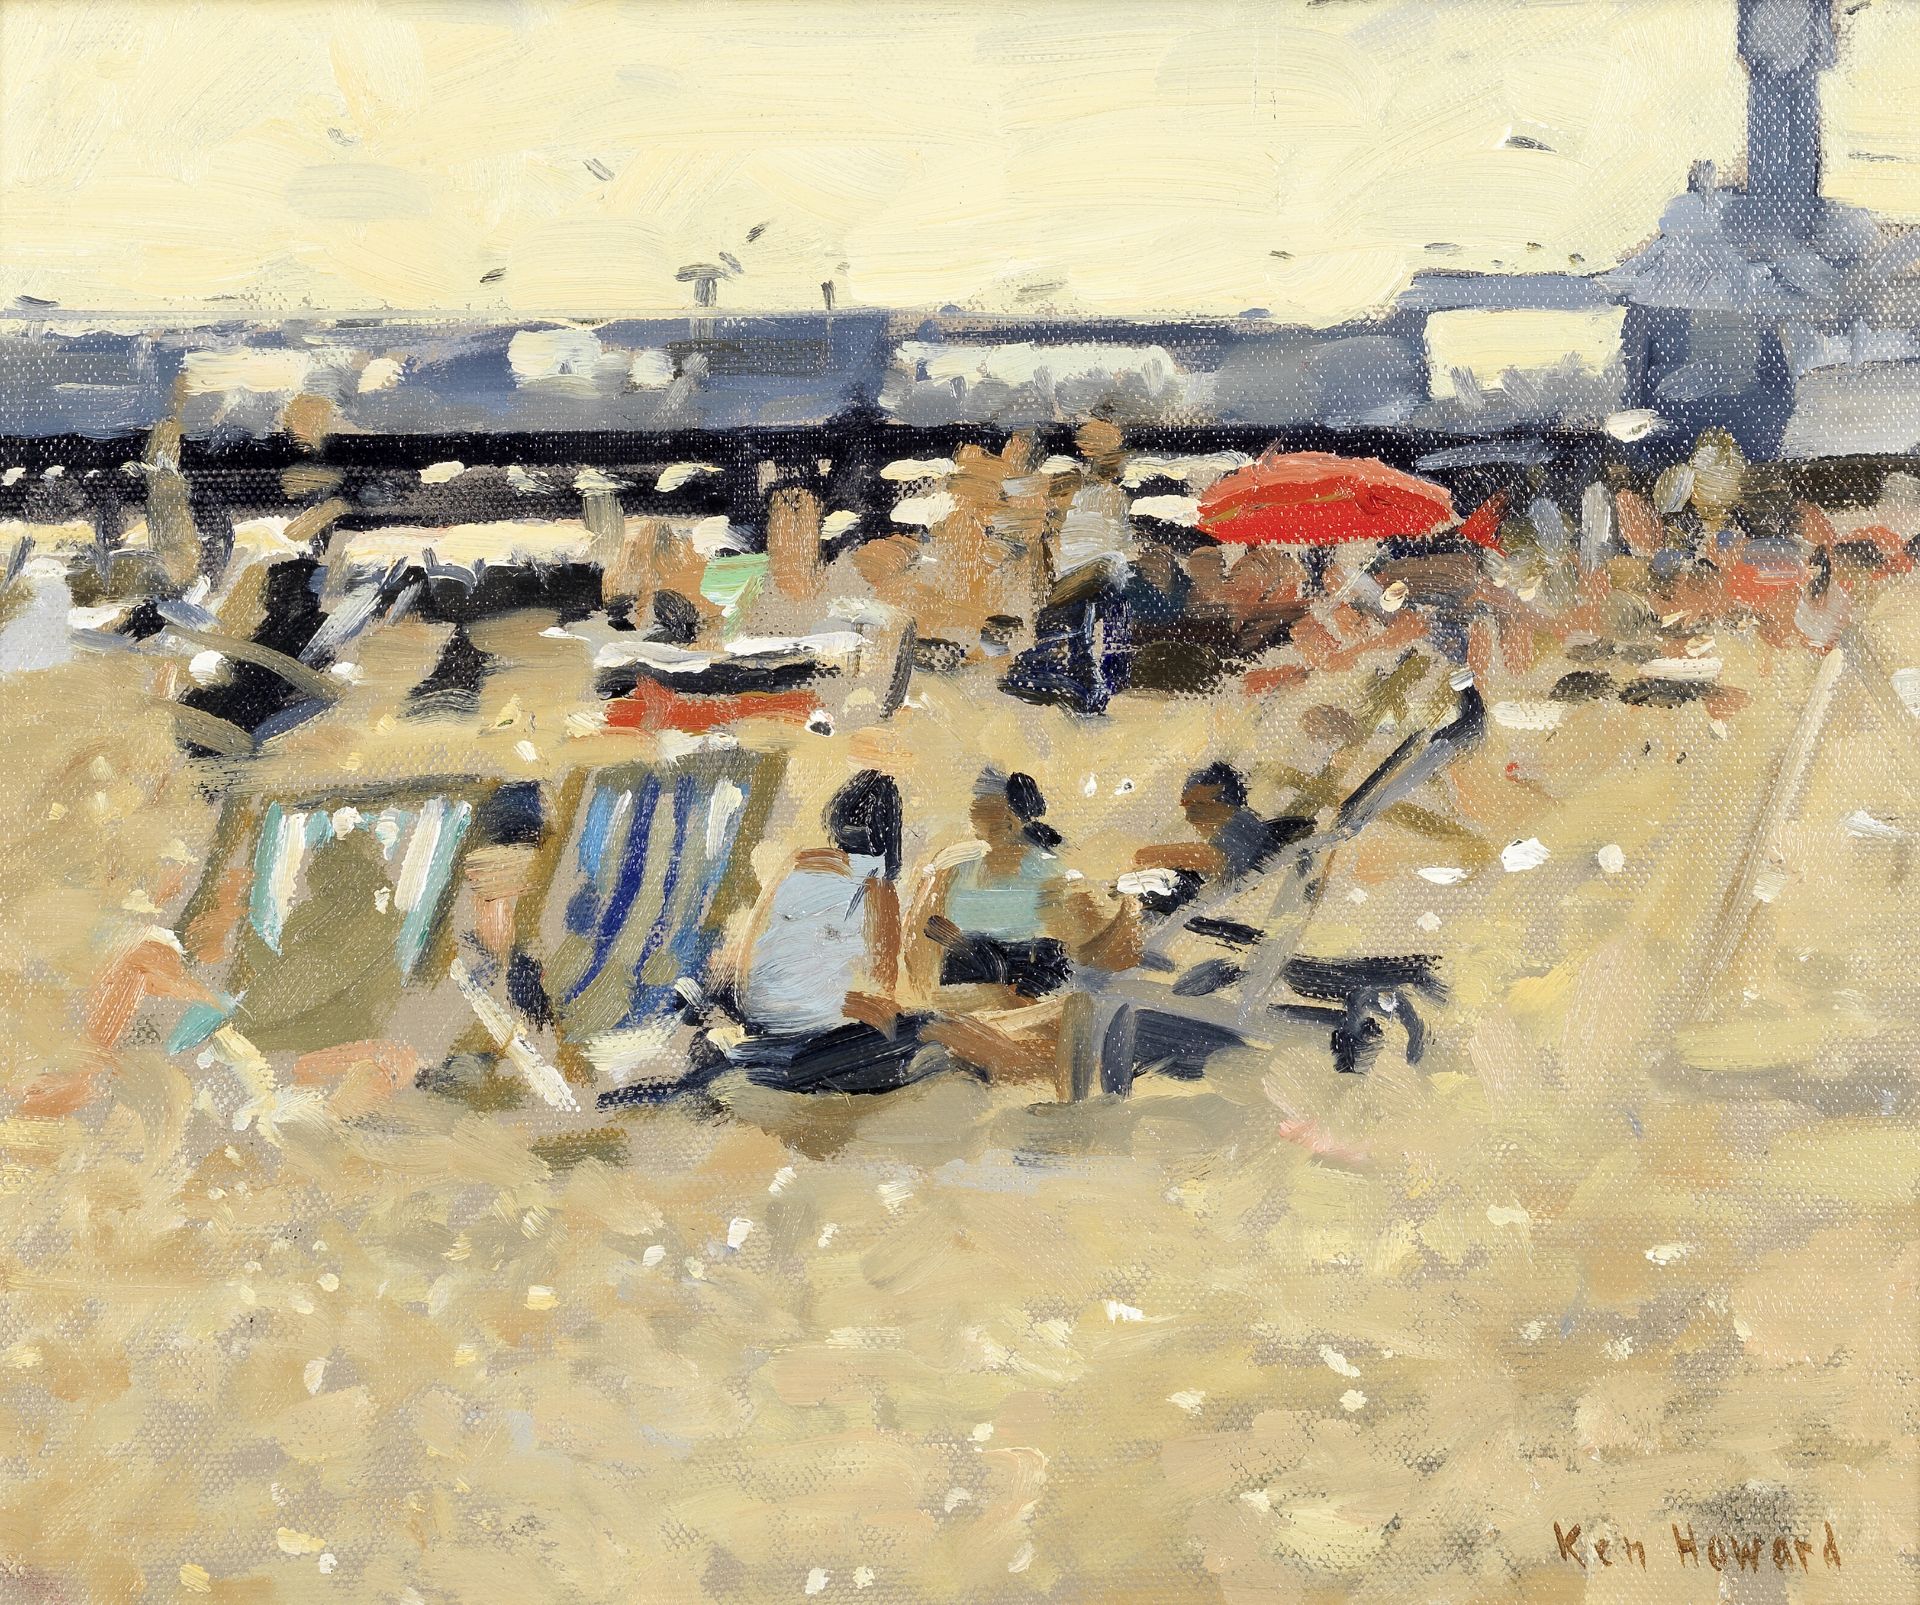 Ken Howard R.A. (British, born 1932) Brighton Beach (Painted in 2000)